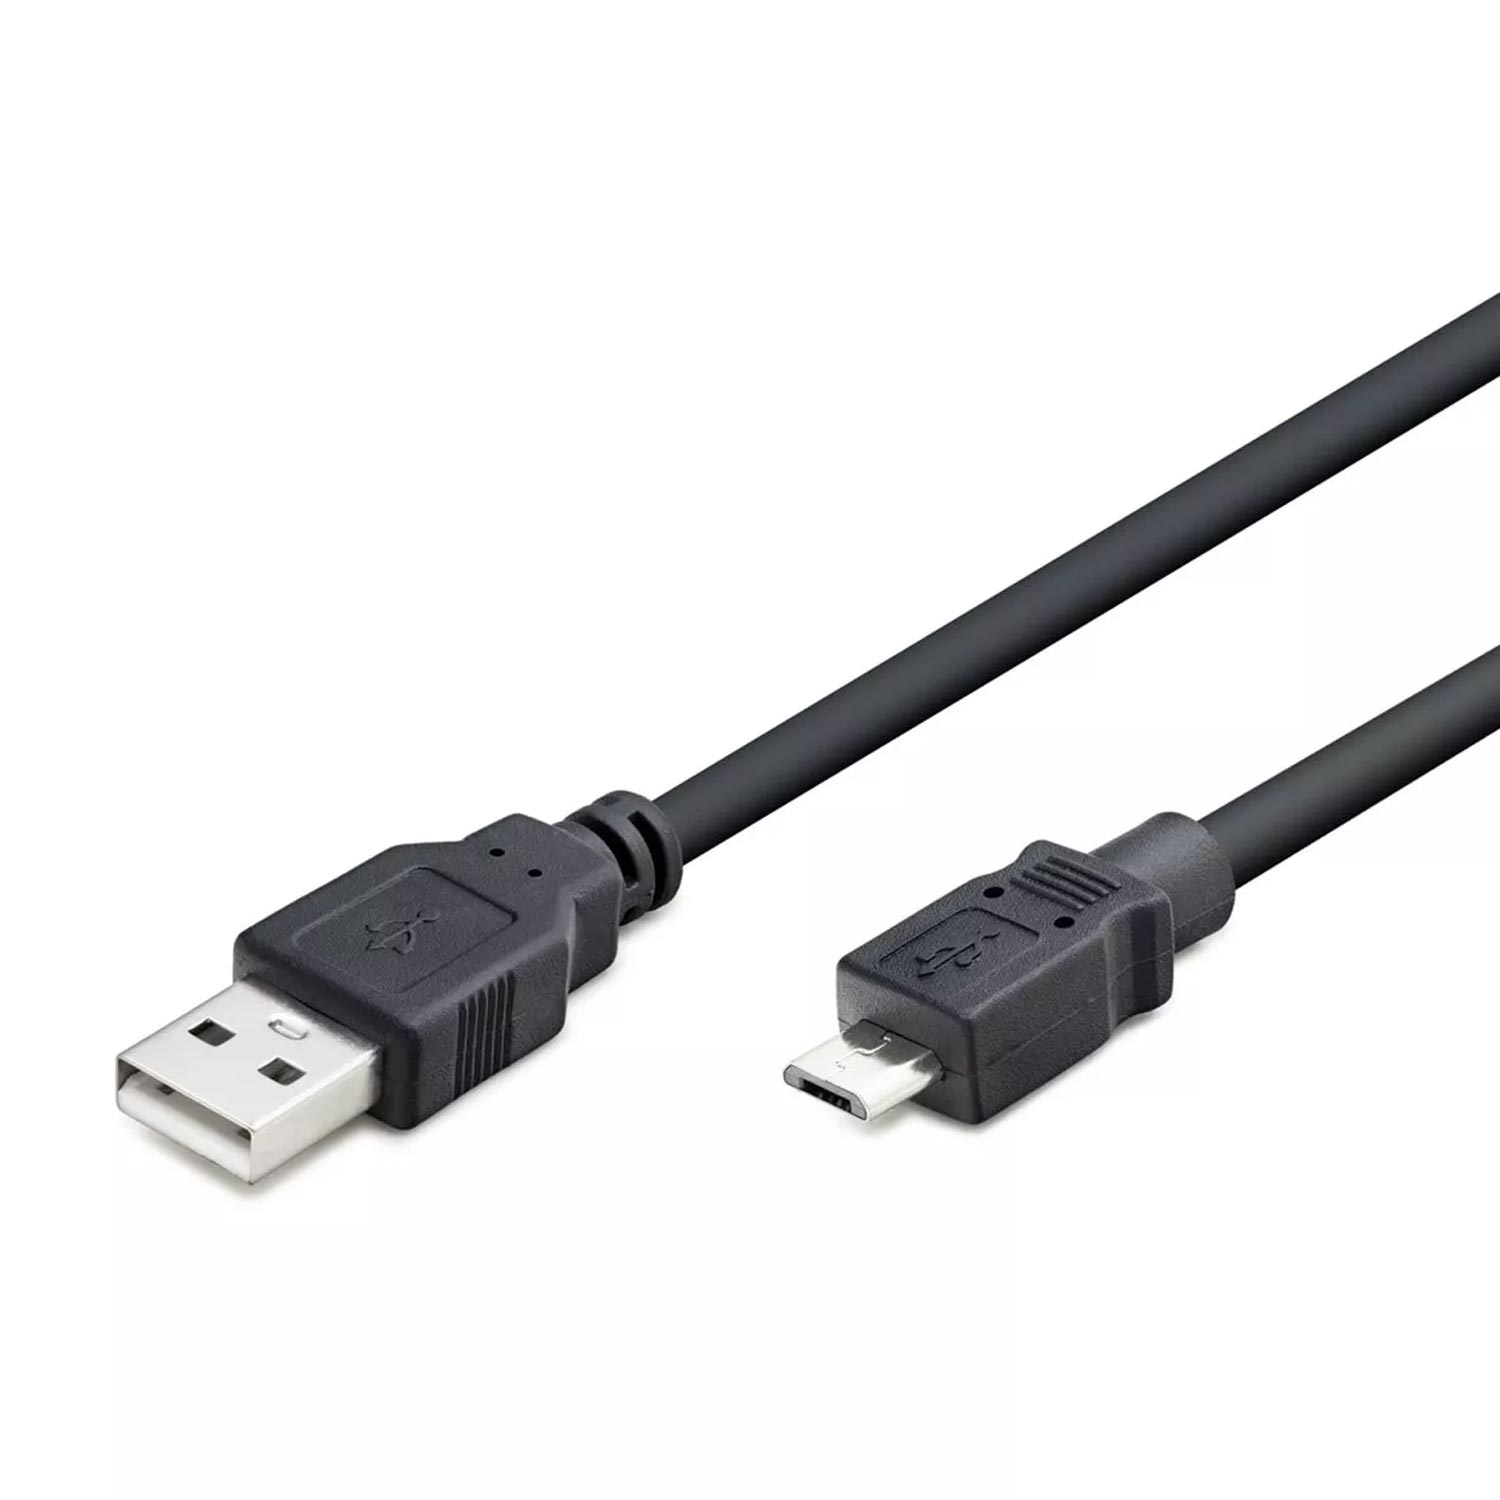 ŞARJ KABLOSU USB TO MICRO PS4 1.8MT HADRON HDX-7551